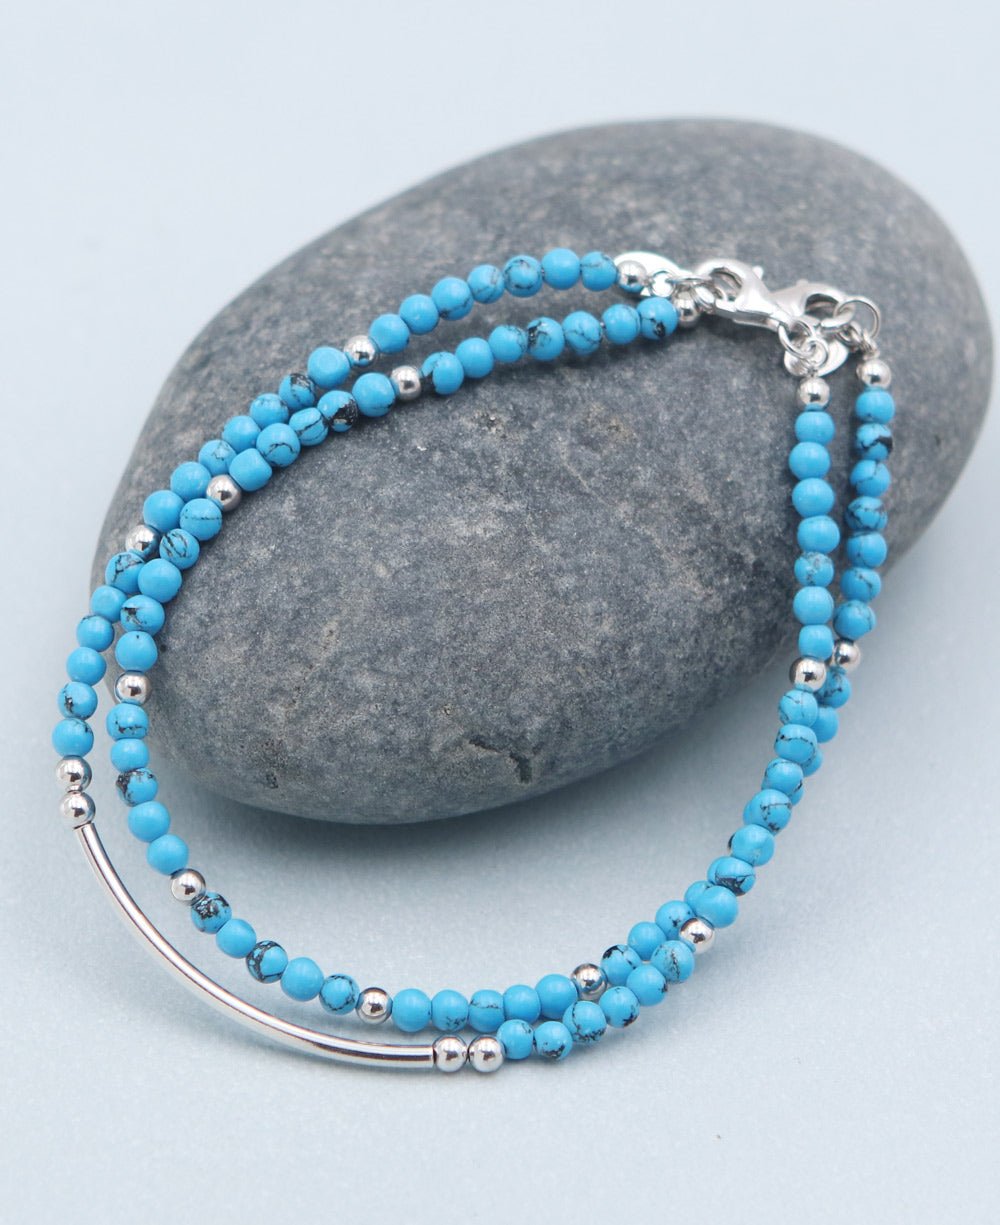 Dainty Beads Turquoise Gemstone Bracelets, Multiple Styles - Bracelets Style A